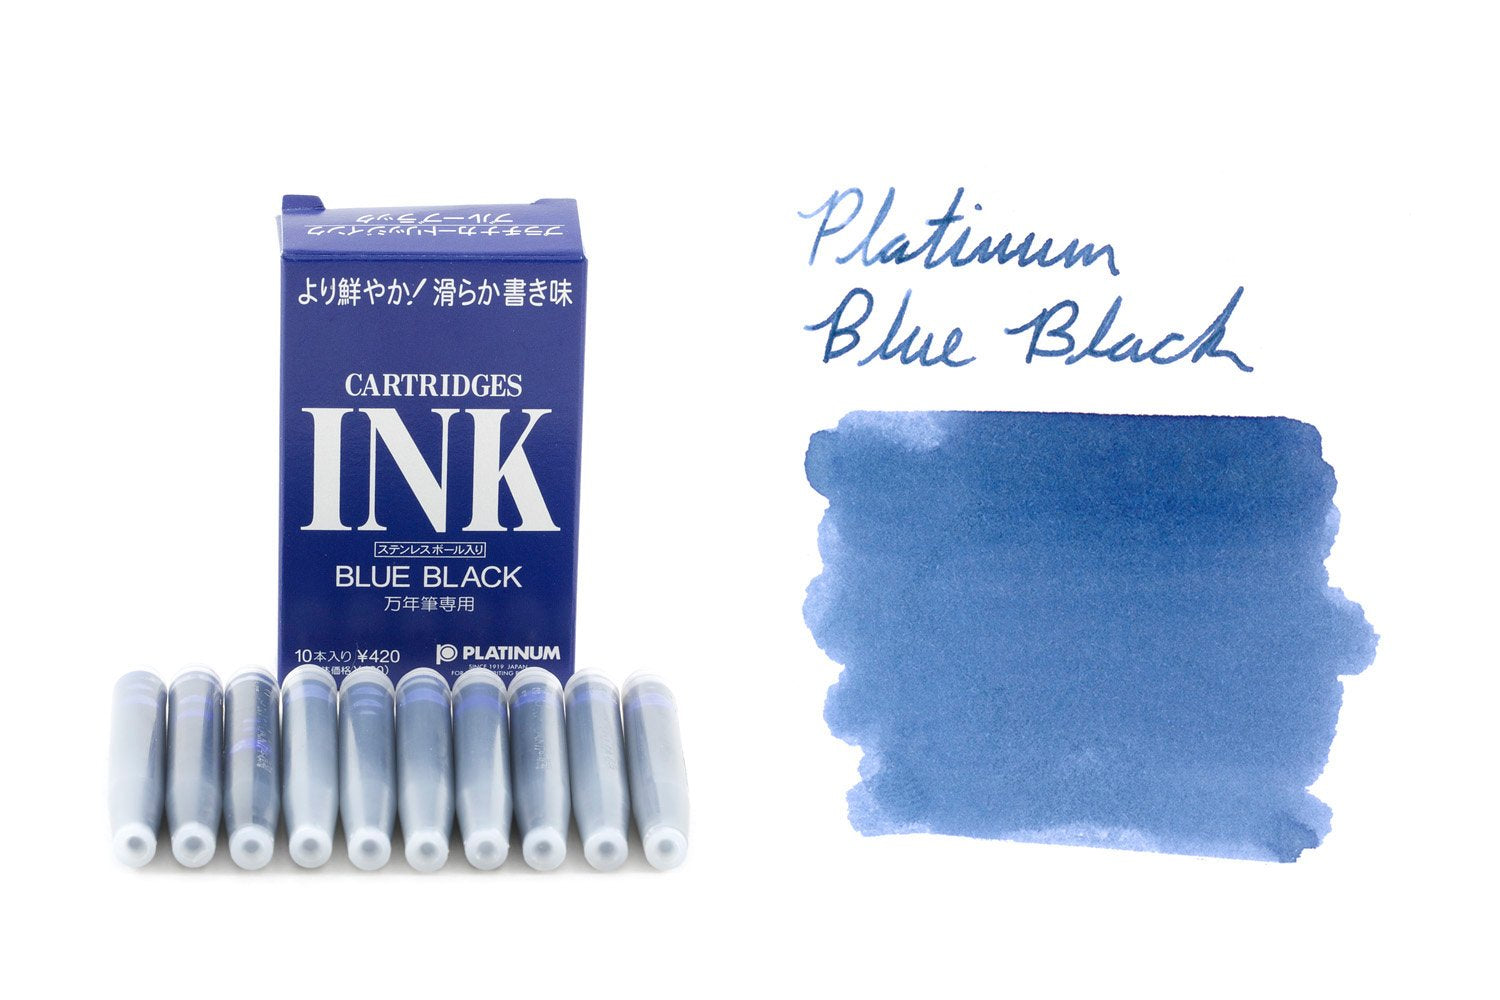 100 Pieces Blue Black Pen Ink Cartridge Fountain Pen Cartridges Refillable Fountain Pen Cartridge, 3.4 mm Bore Diameter